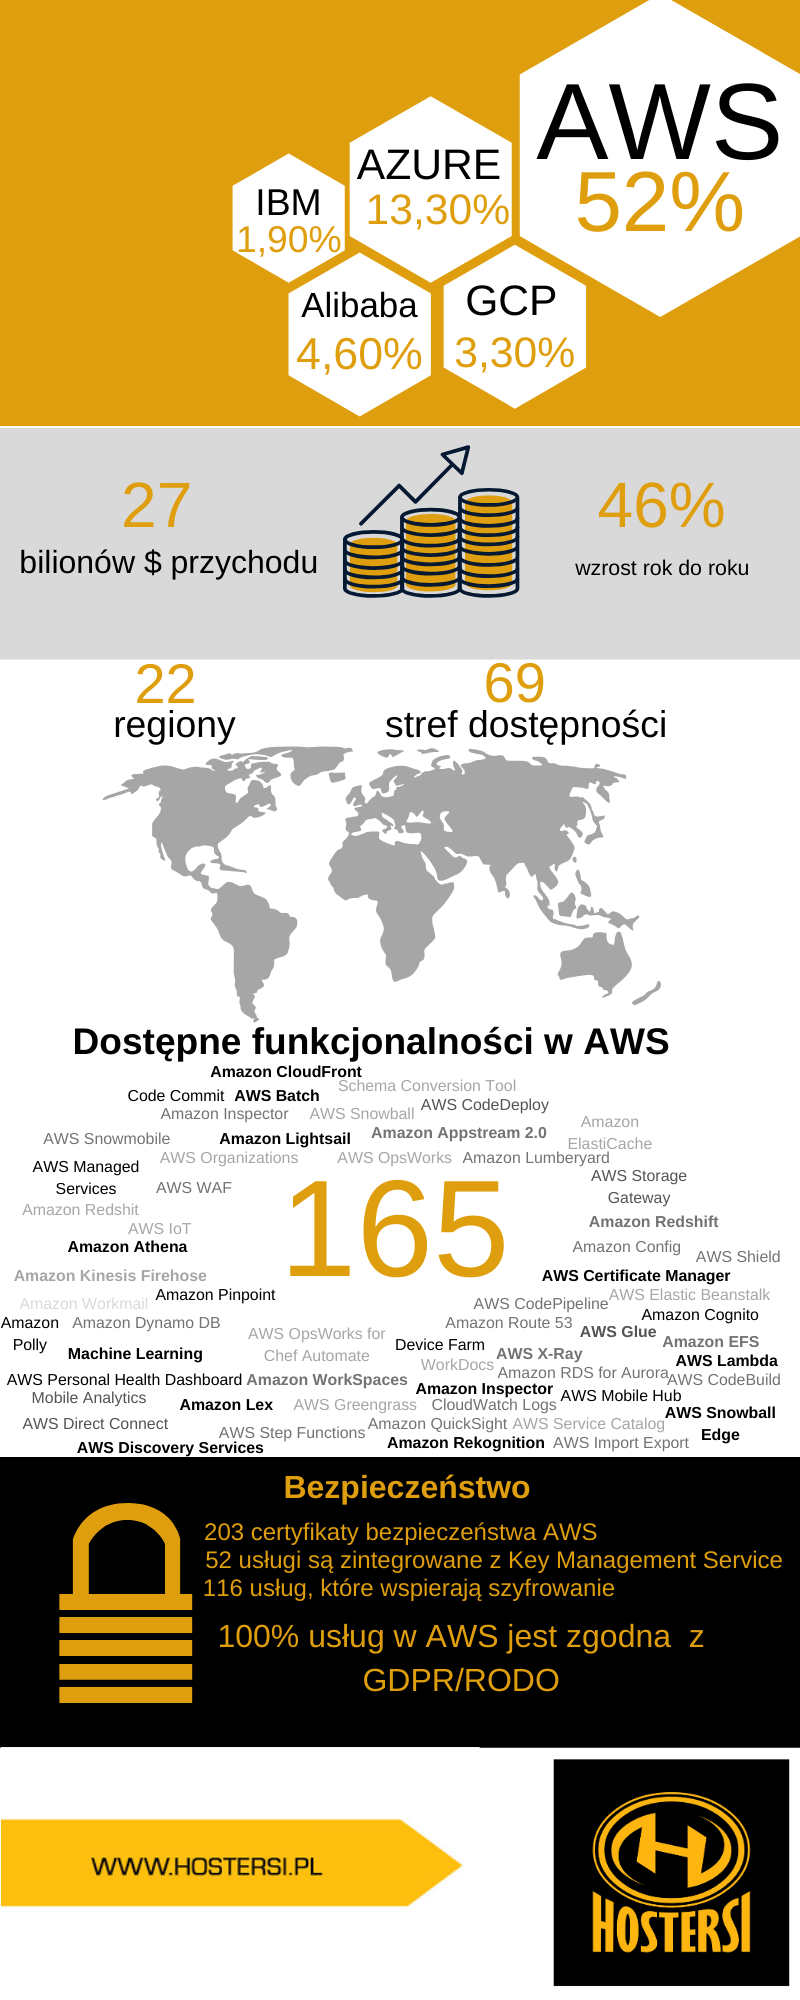 Amazon Web Services w liczbach